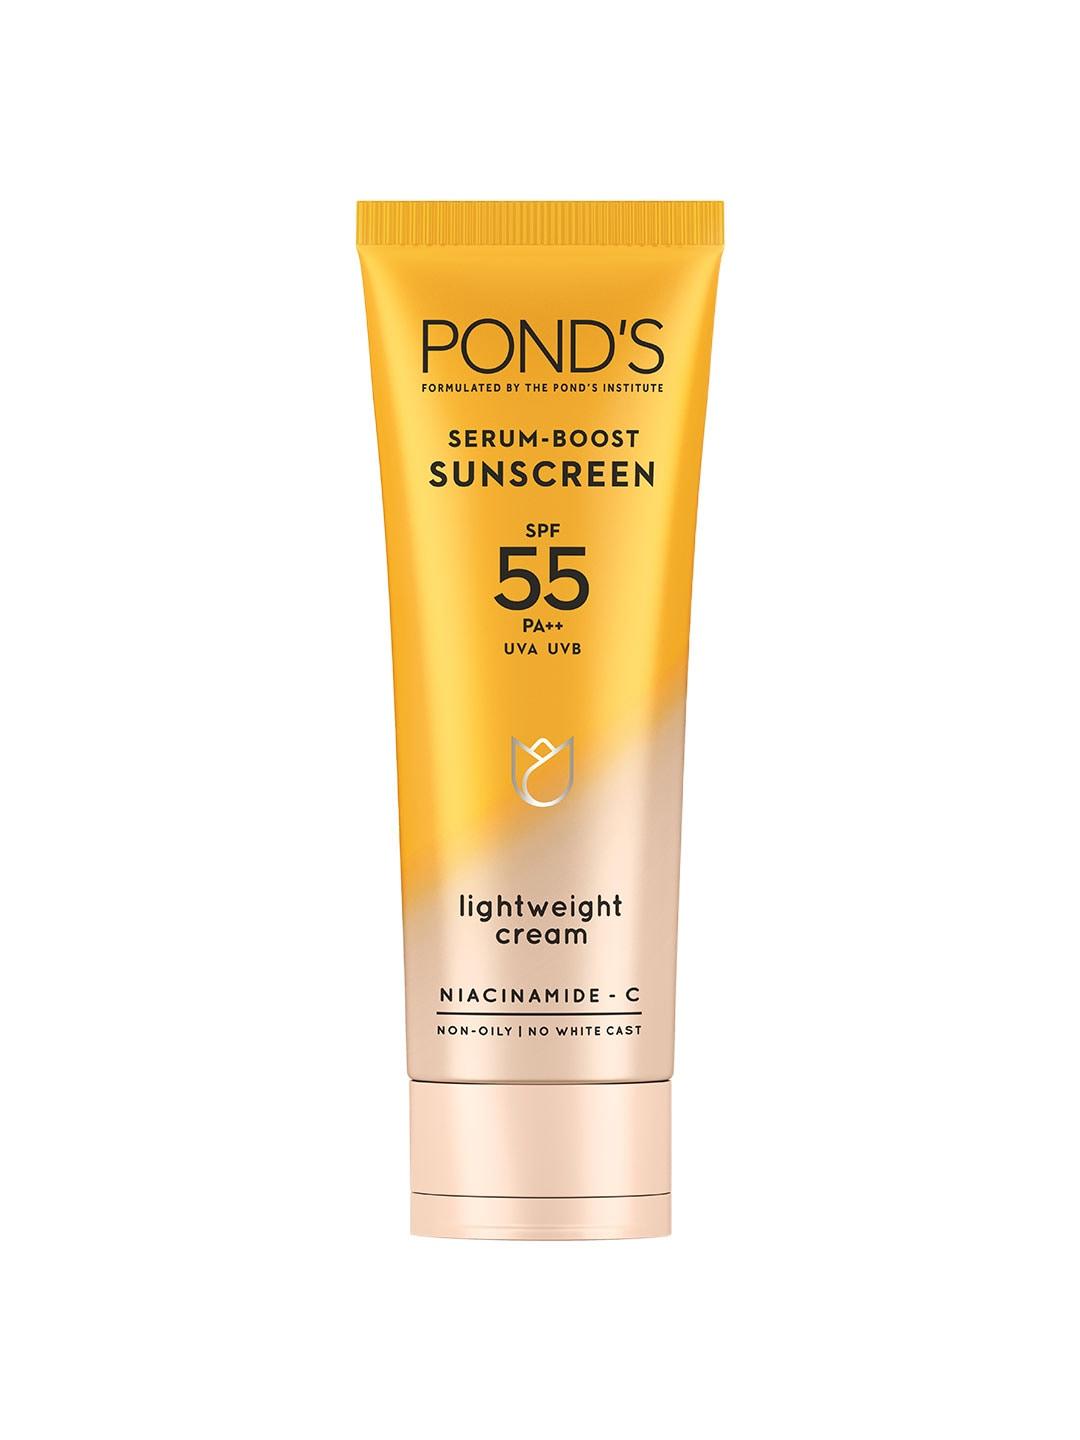 Ponds SPF 55 PA++ UVA UVB Serum Boost Sunscreen with Niacinamide C - 100 g